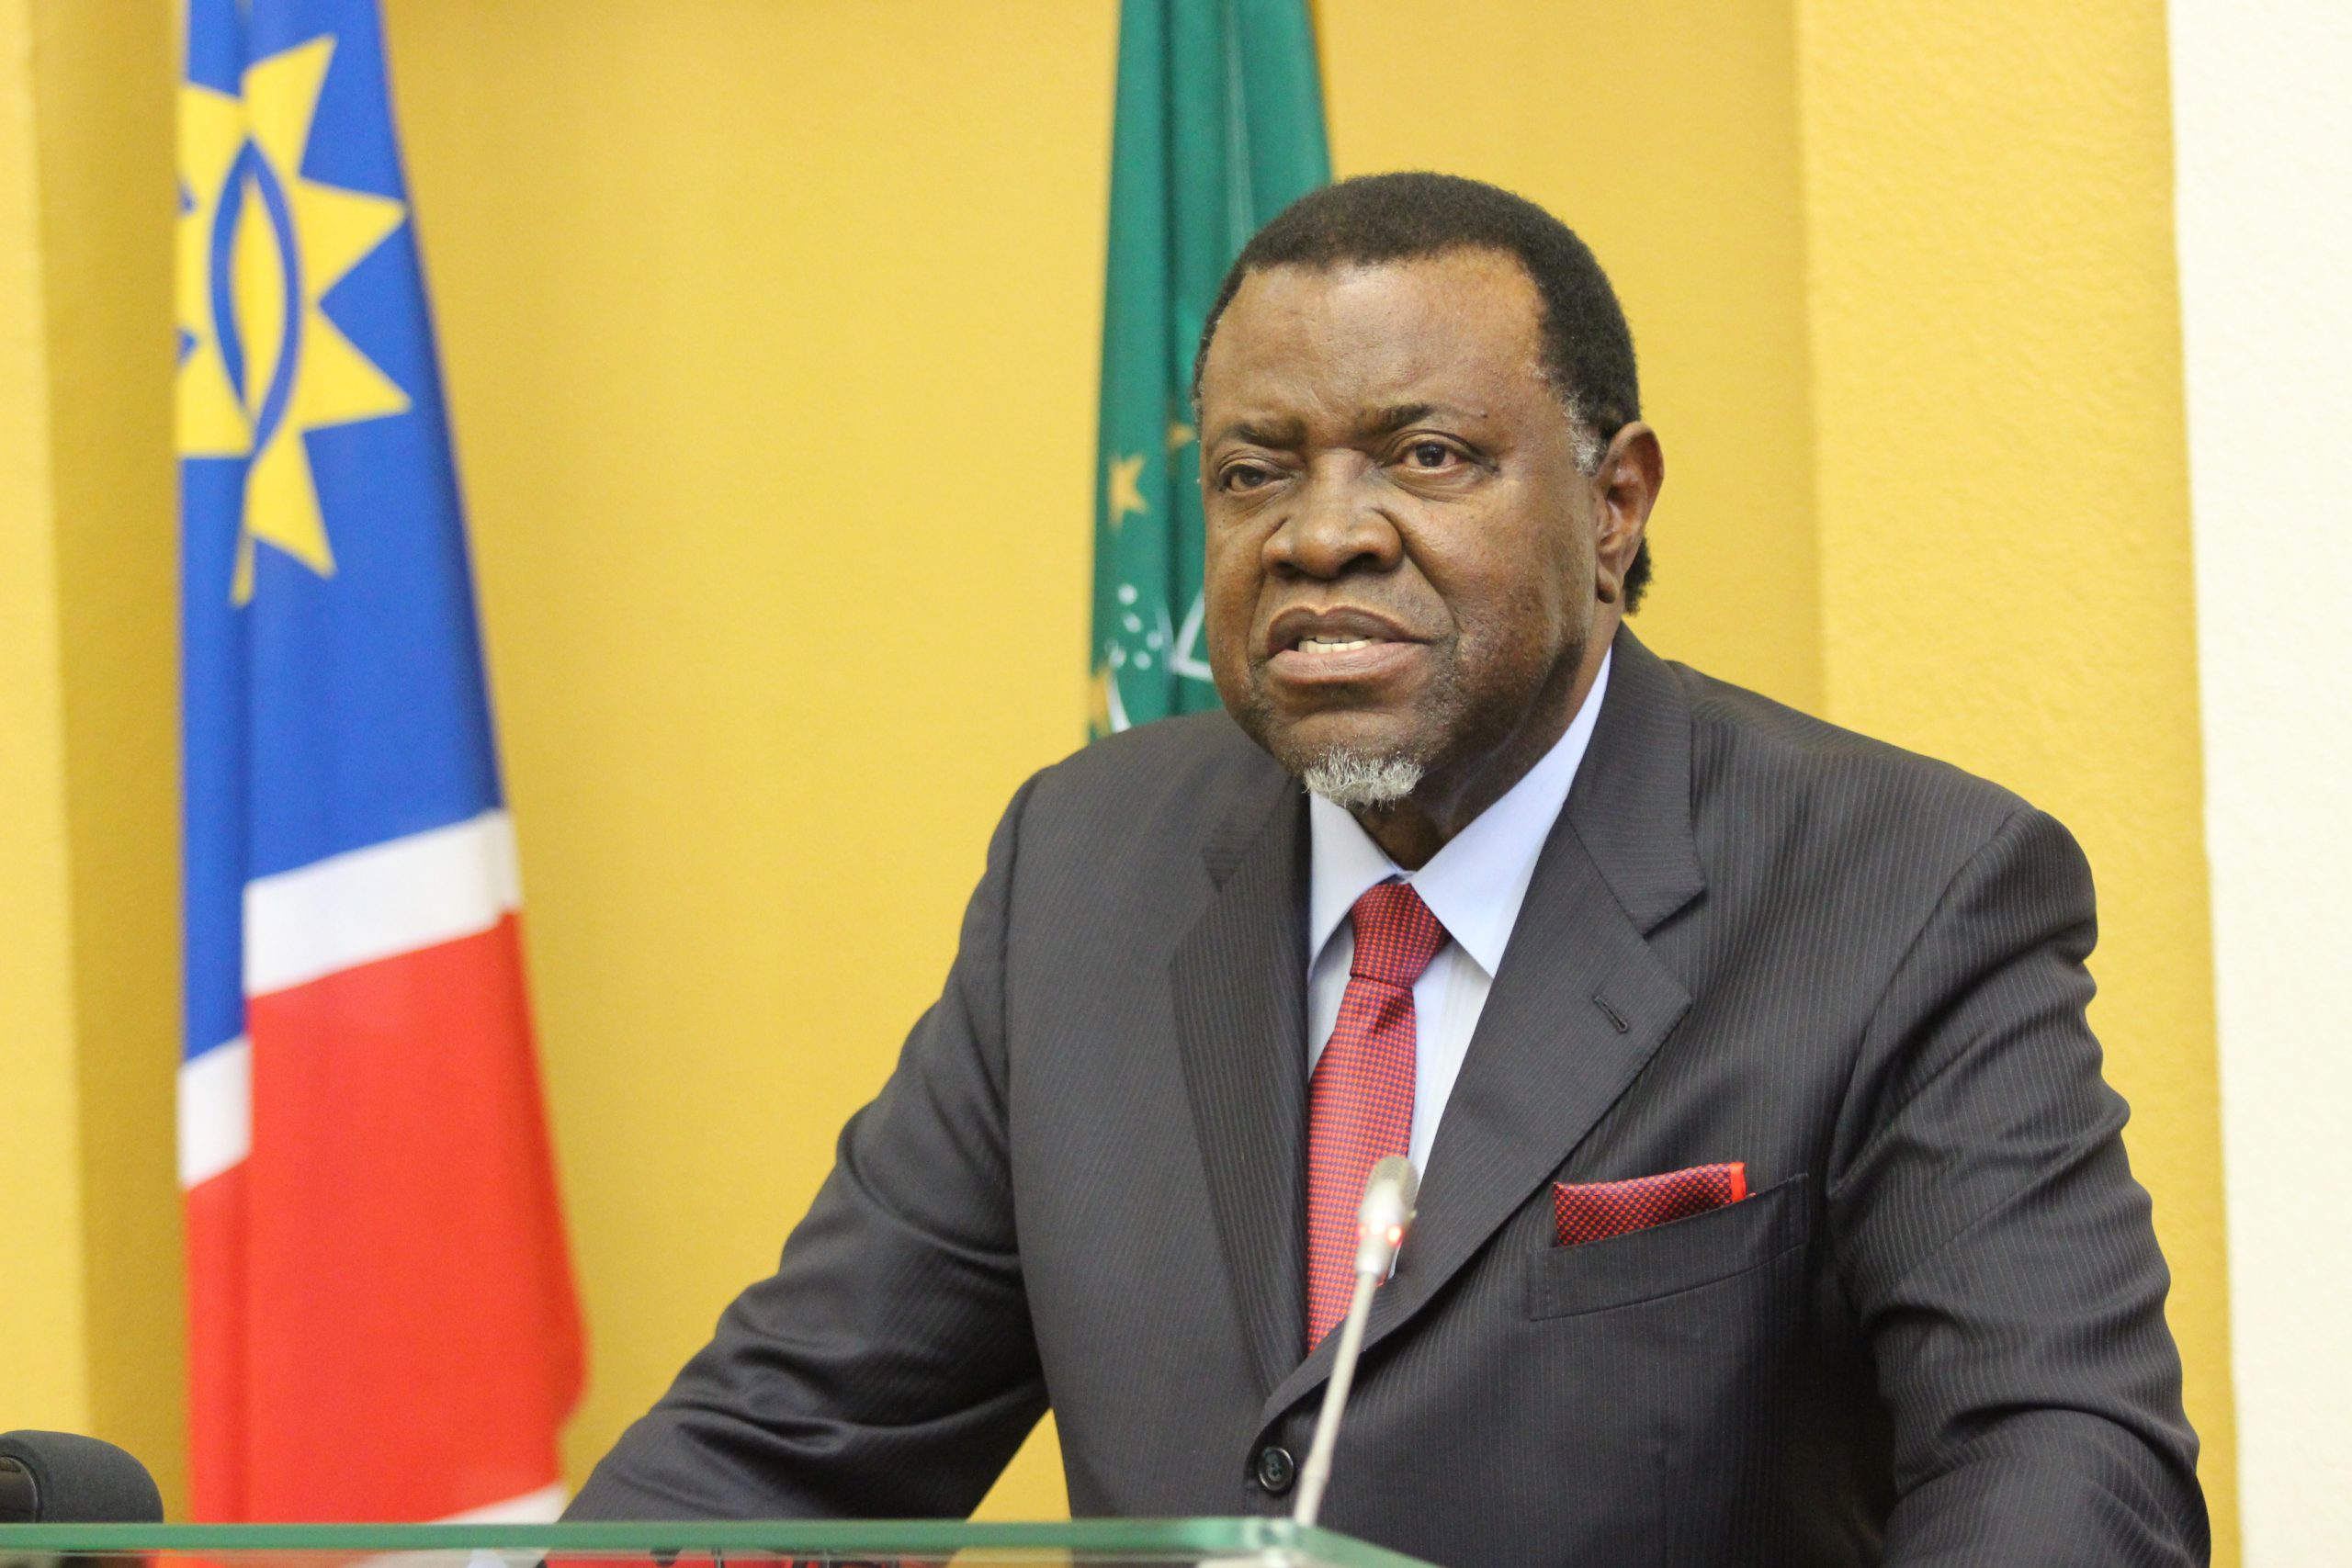 President Hage Geingob of the republic of Namibia